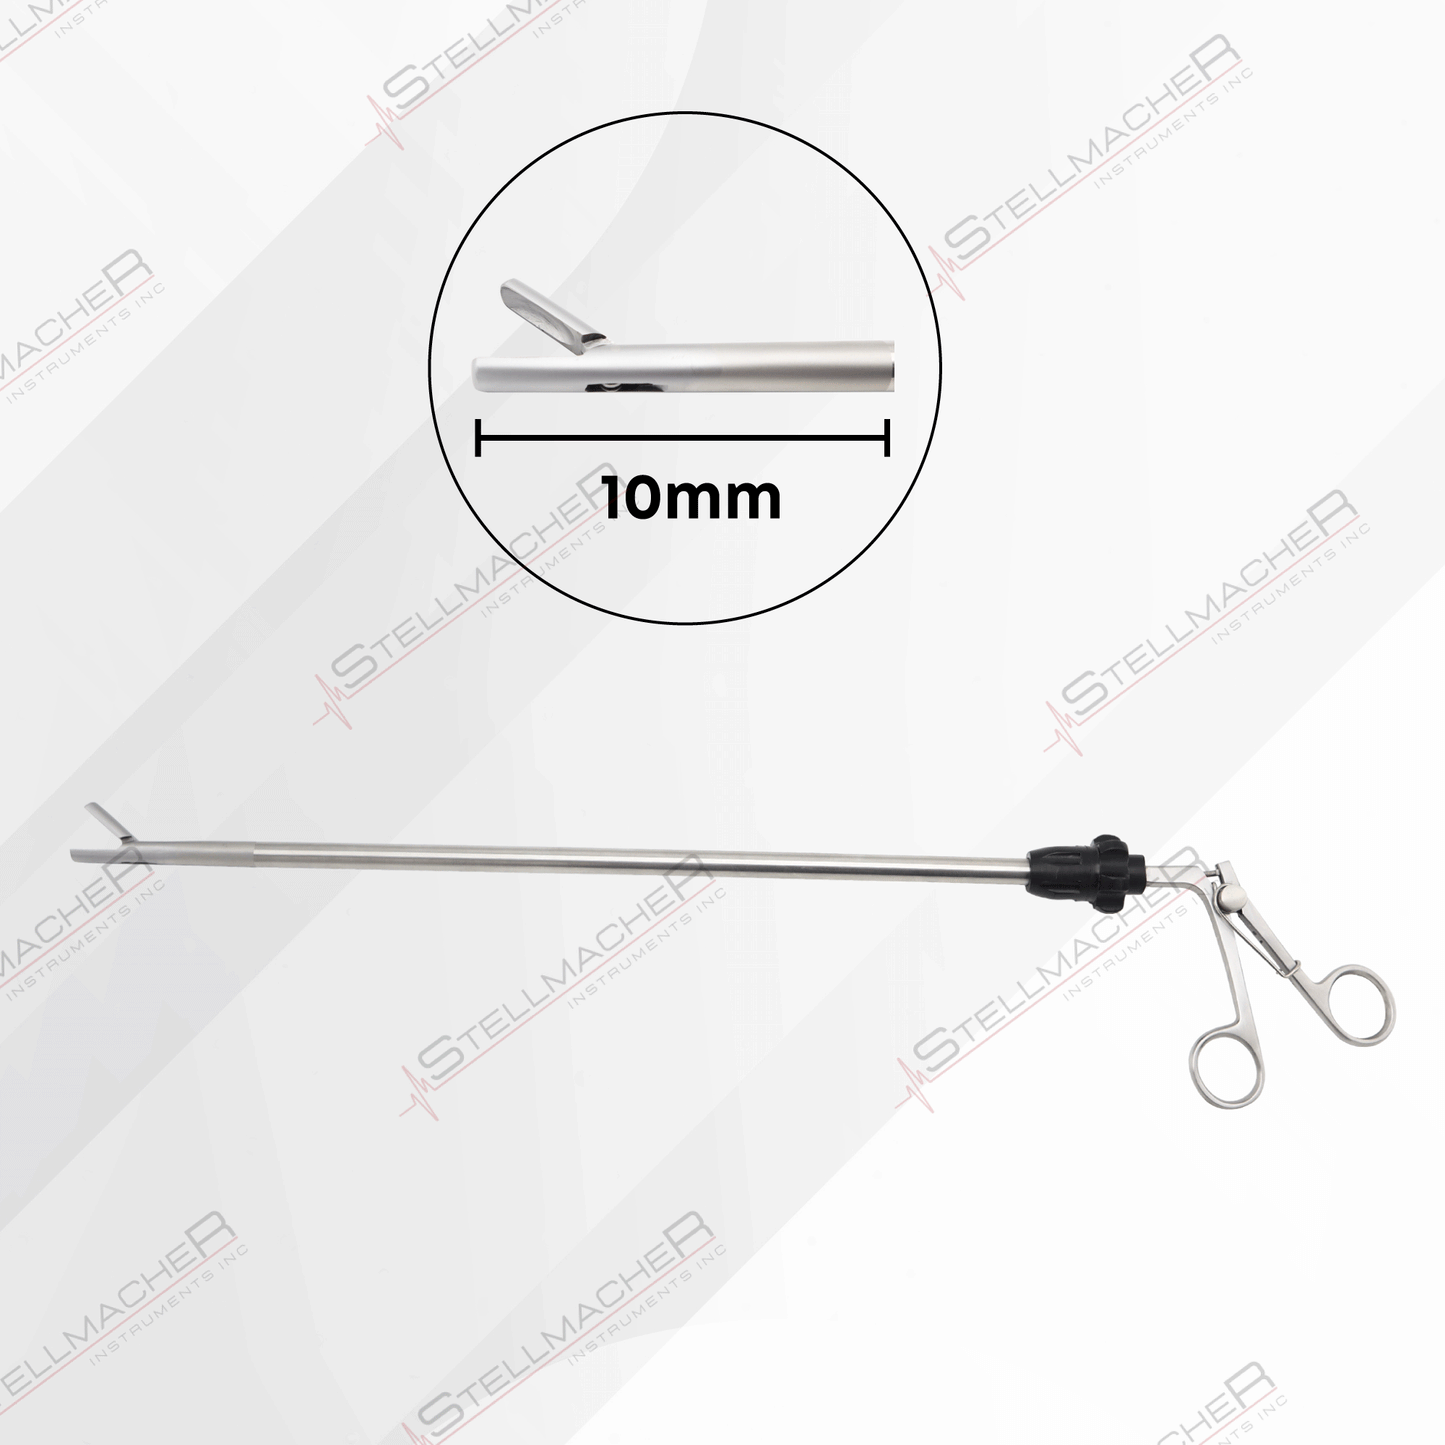 Laparoscopic Spoon Forceps - Rotatable - 10mm